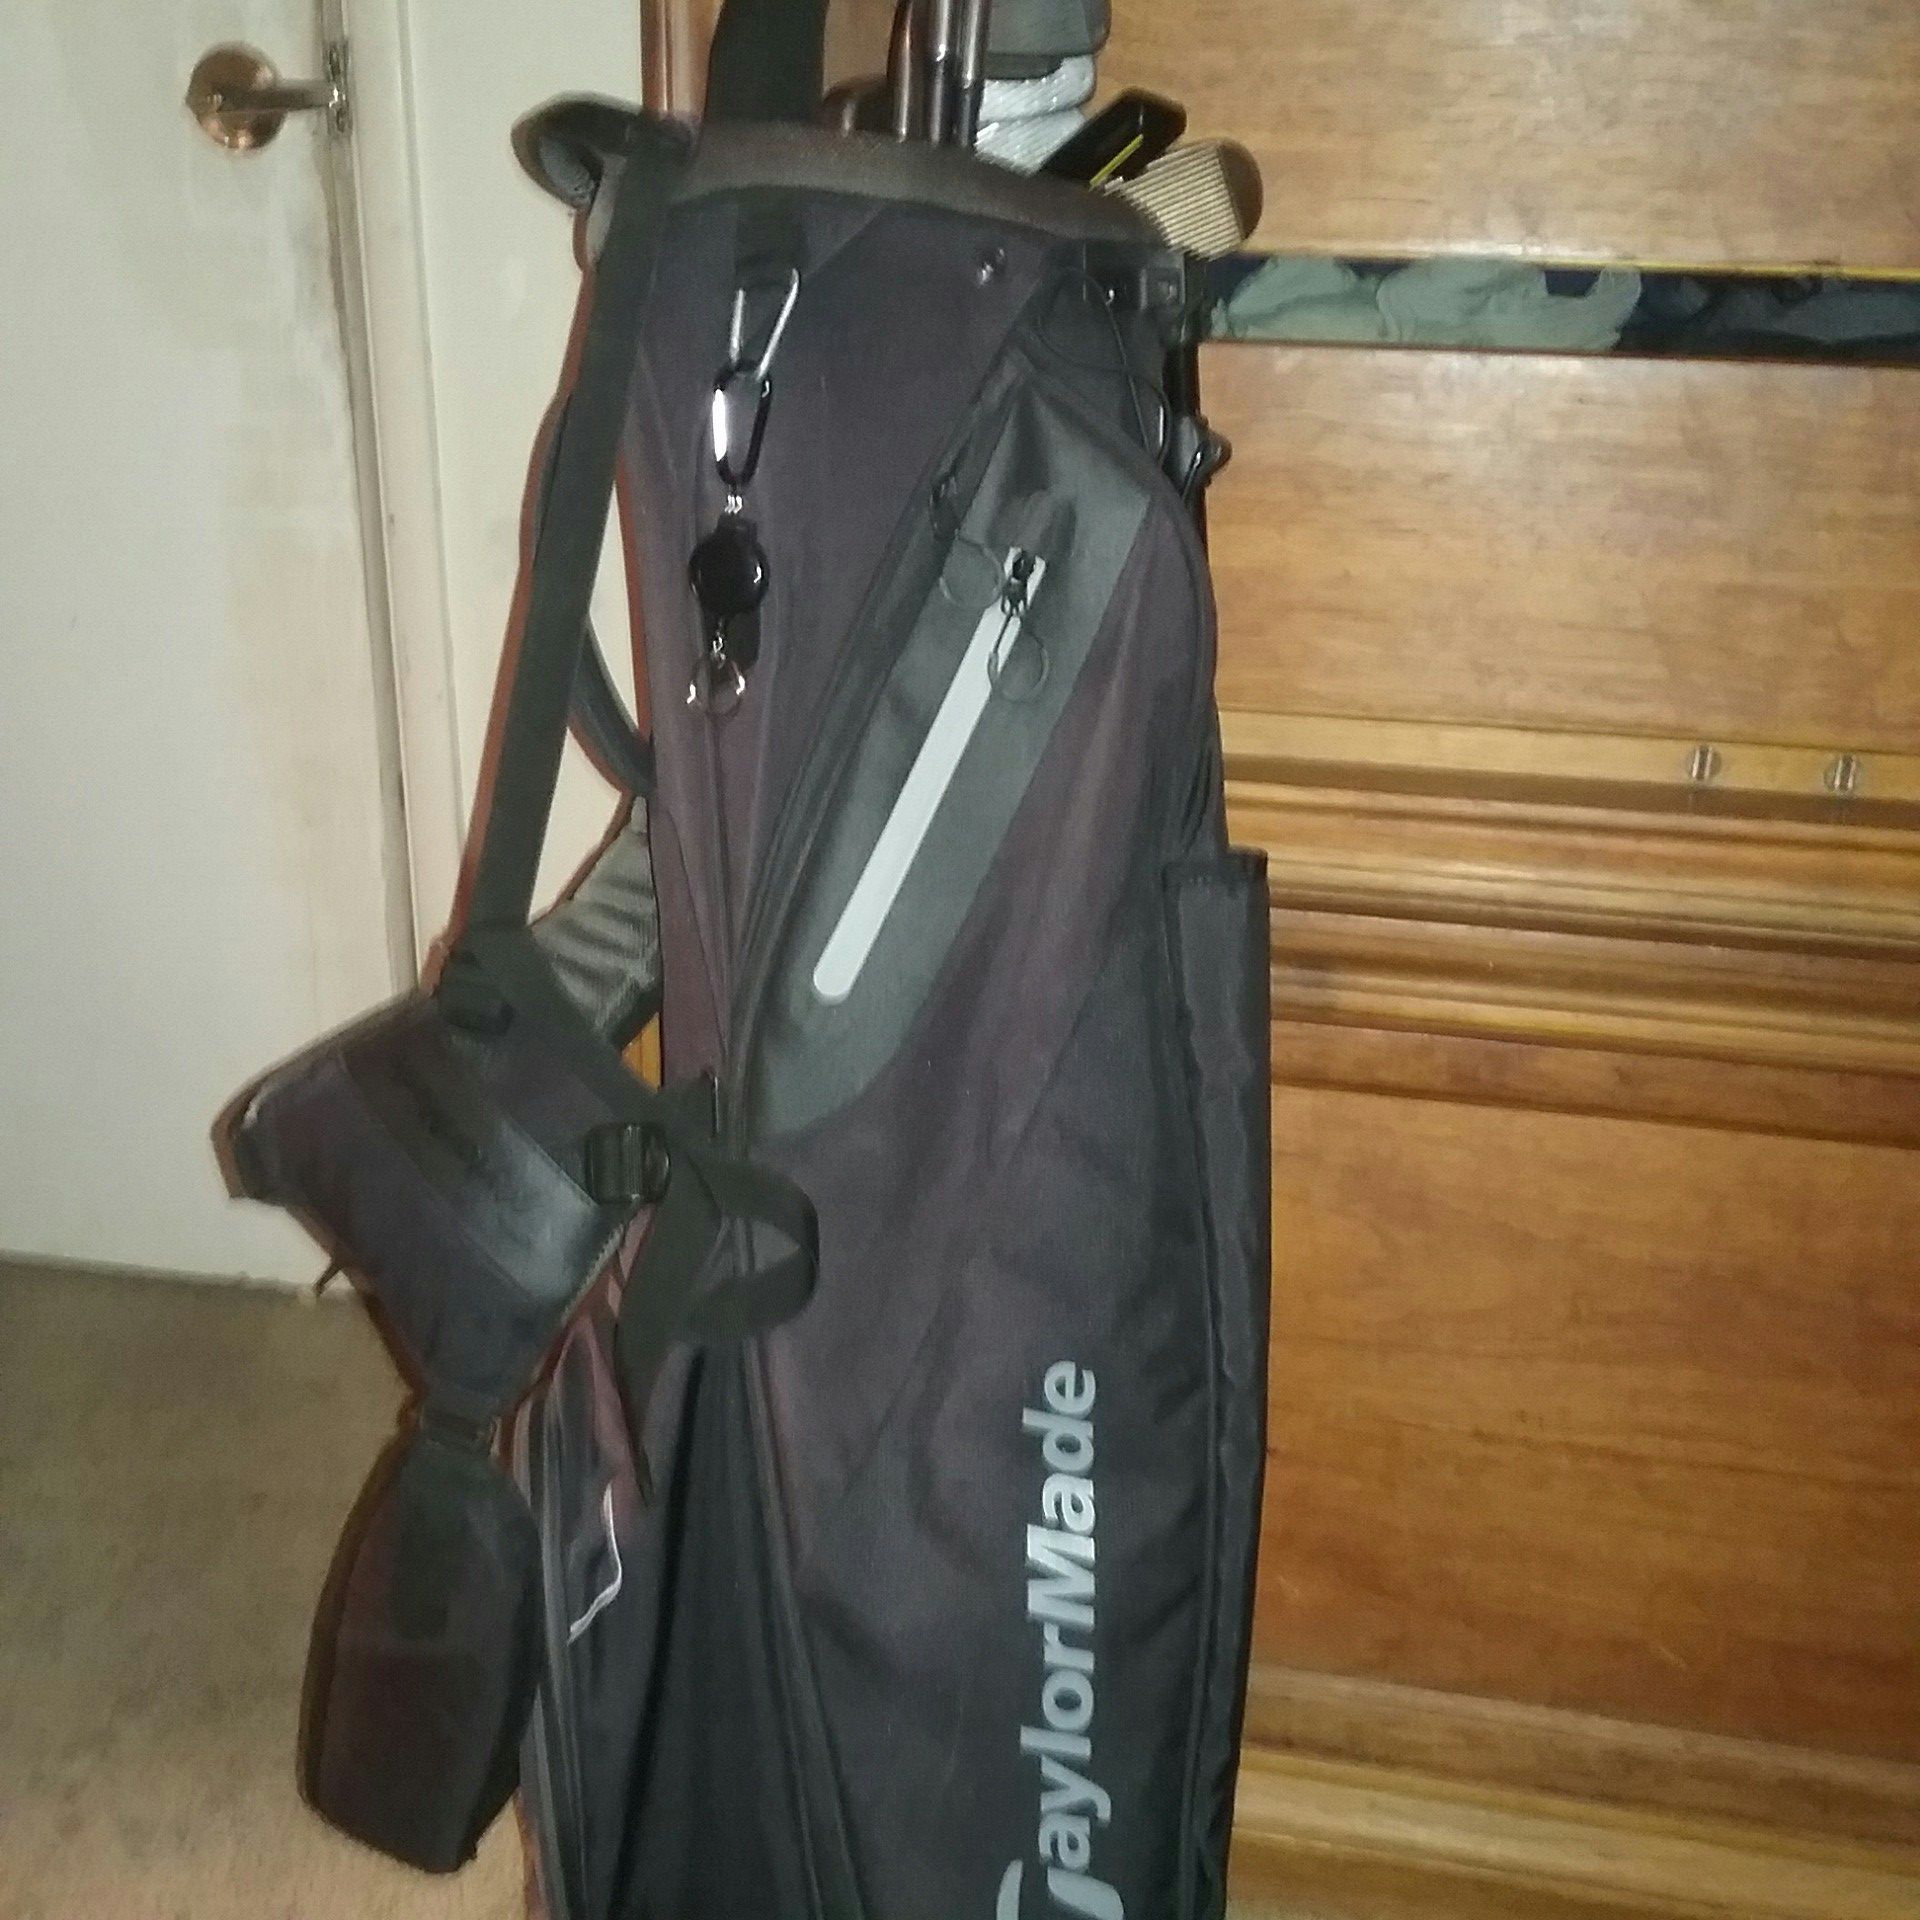 TaylorMade golf set with bag